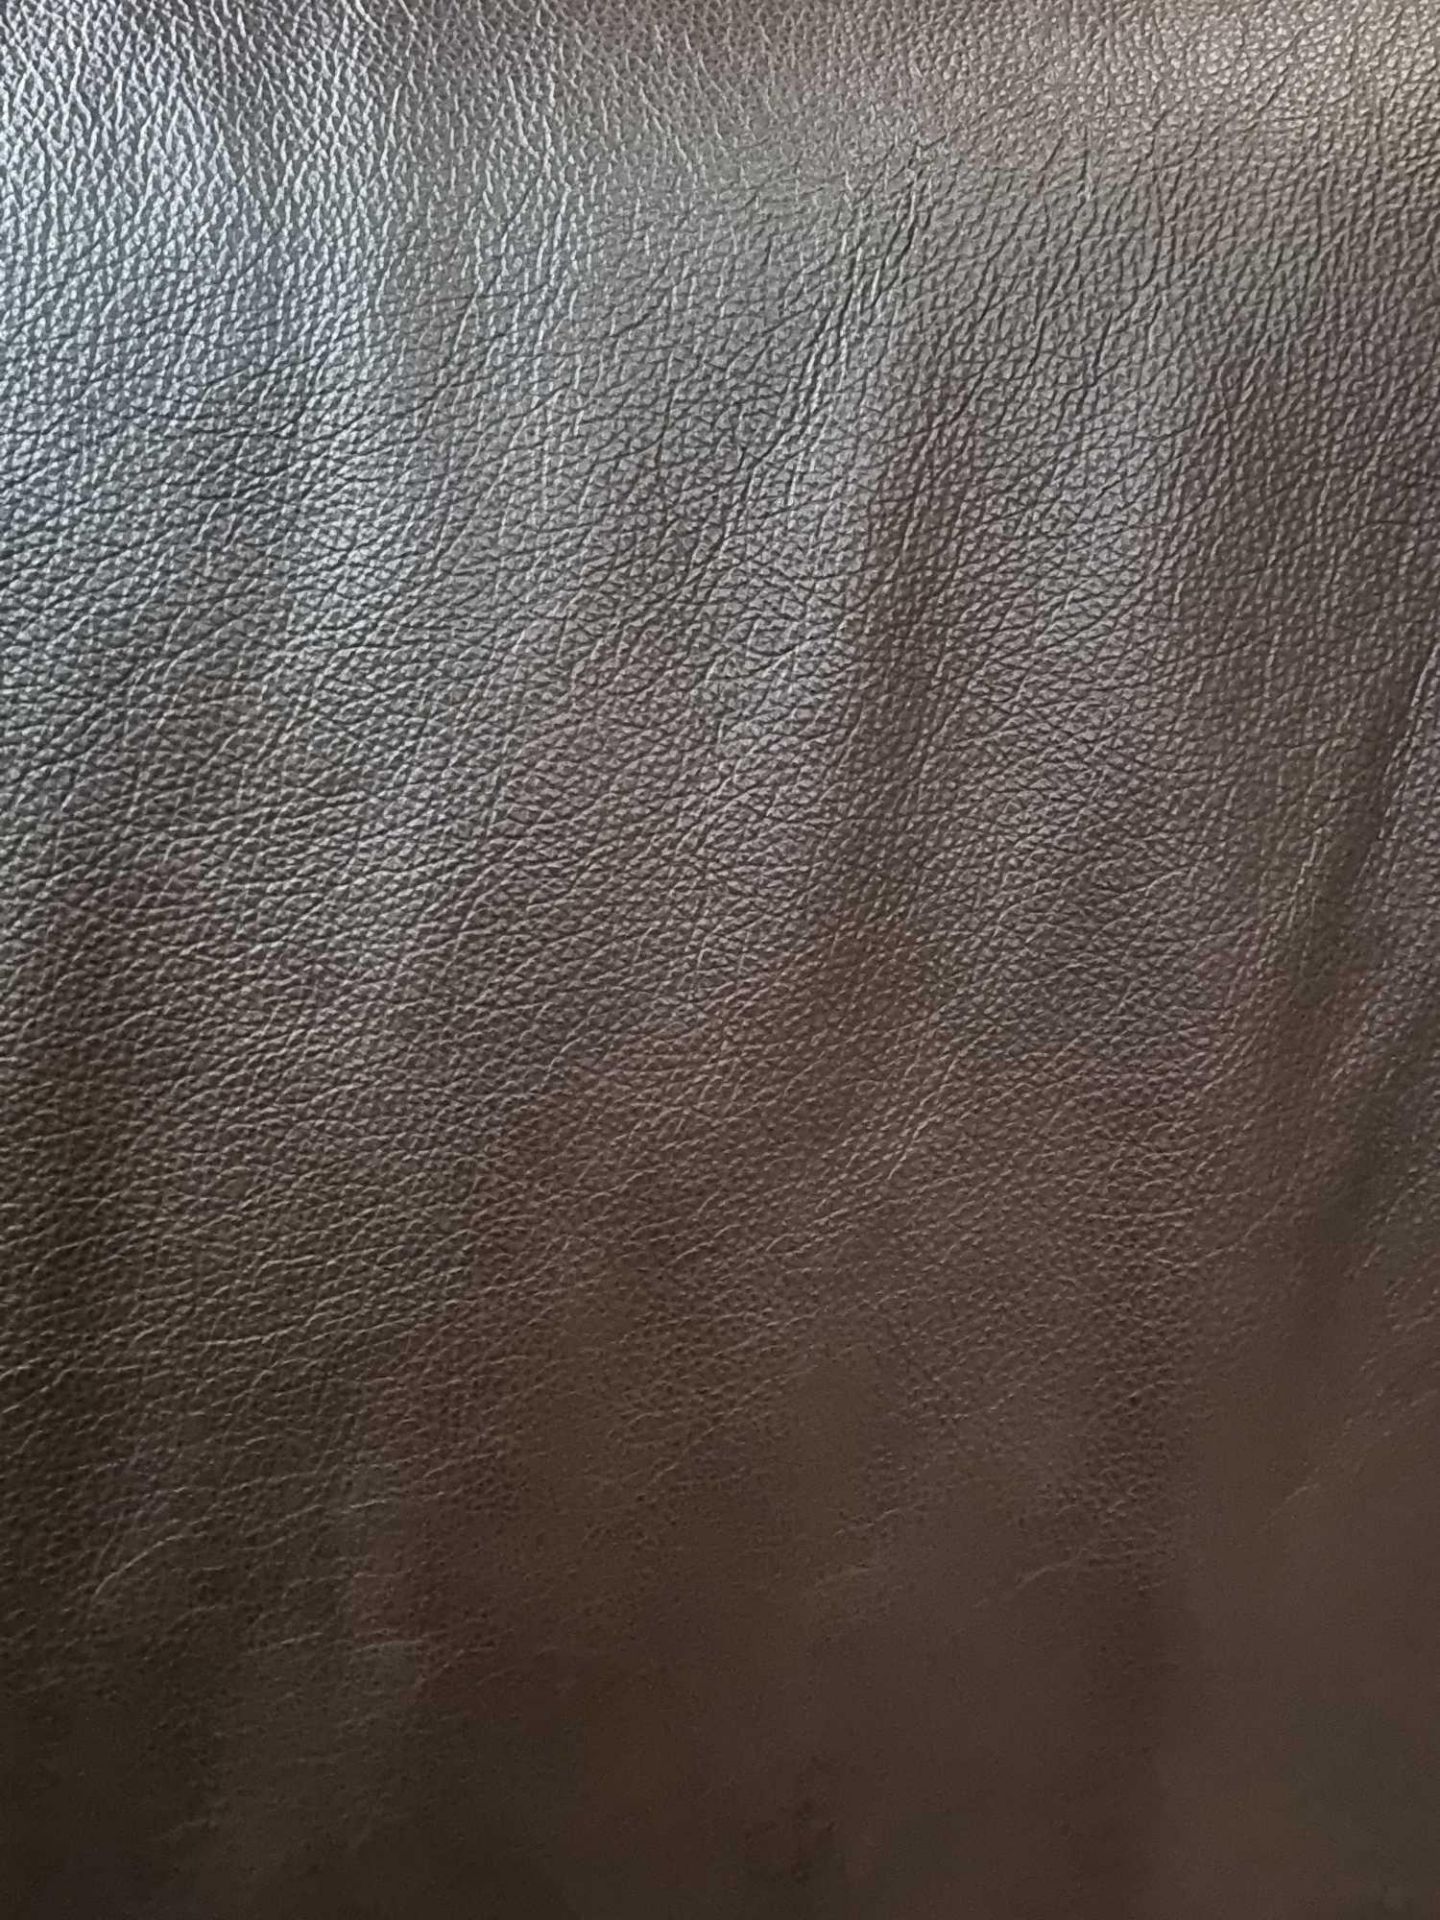 Mastrotto Hudson Chocolate Leather Hide approximately 3.2mÂ² 2 x 1.6cm - Bild 2 aus 2